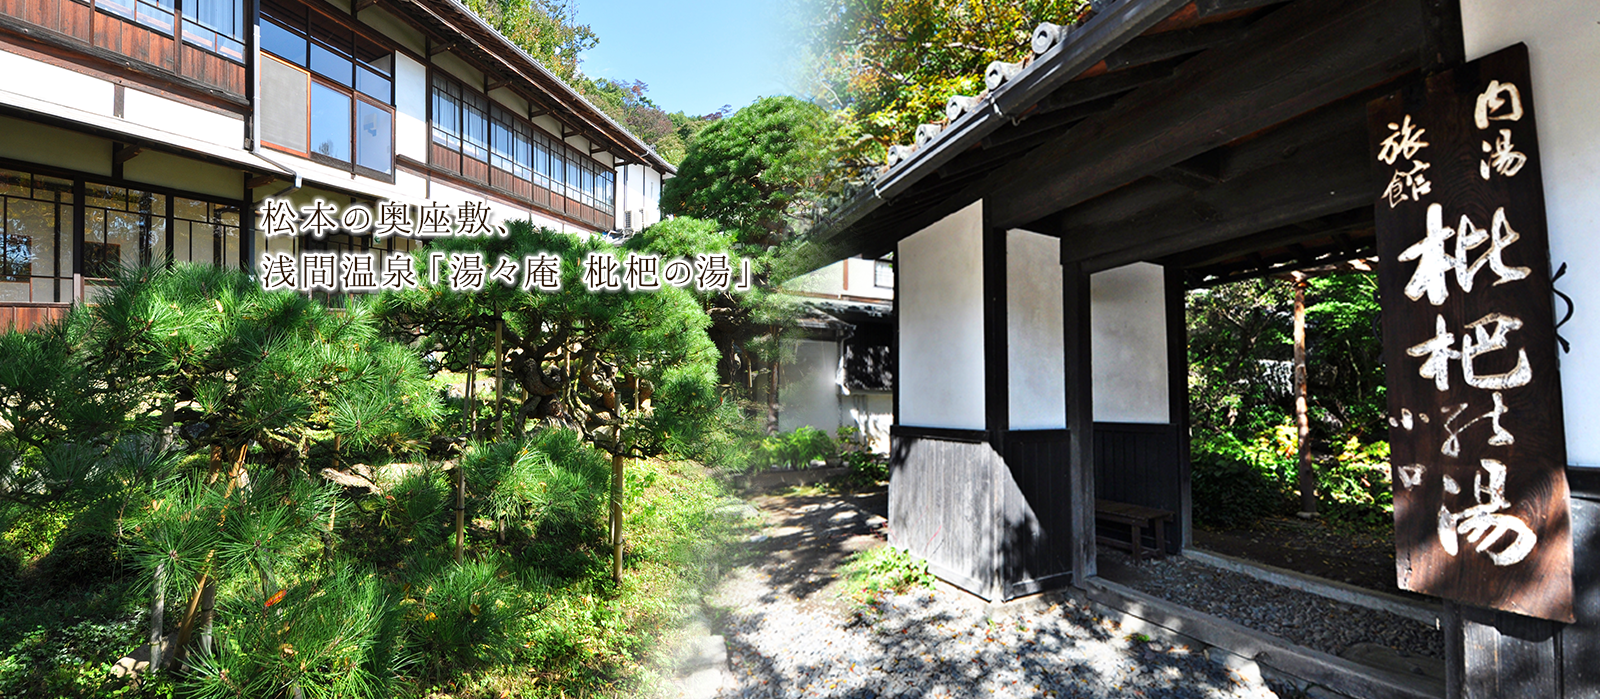 松本の奥座敷、浅間温泉「湯々庵 枇杷の湯」